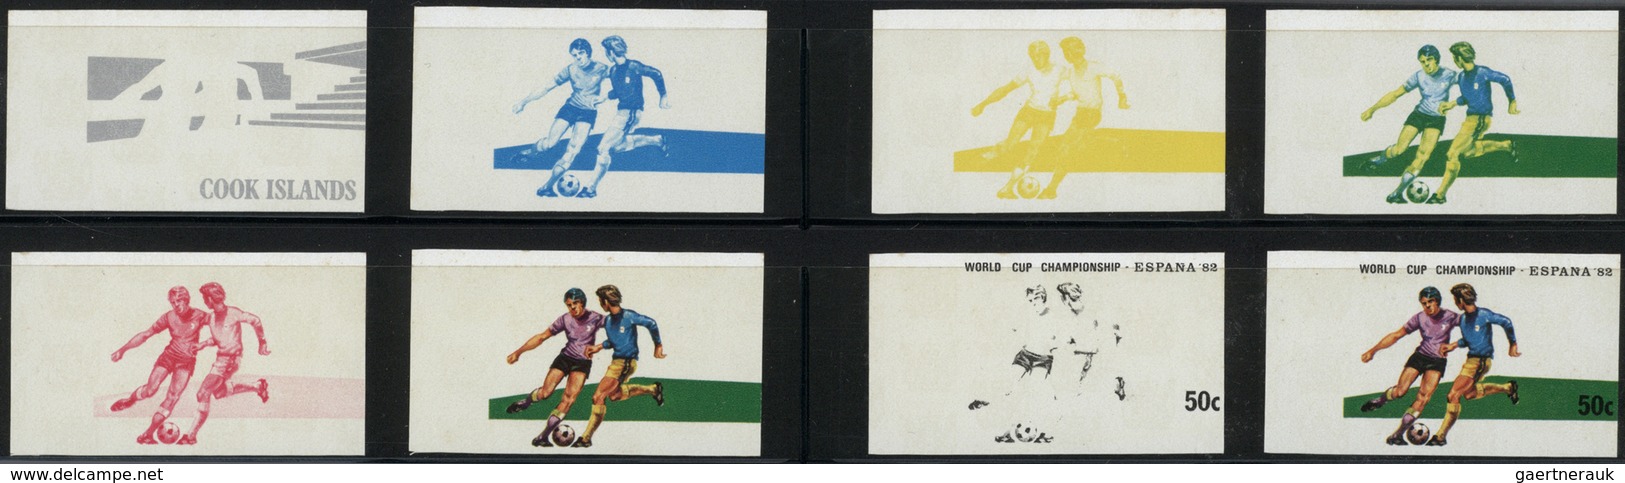 Thematik: Sport-Fußball / sport-soccer, football: 1981, SOCCER WORLD CUP CHAMPIONSHIP ESPANA '82 - 6